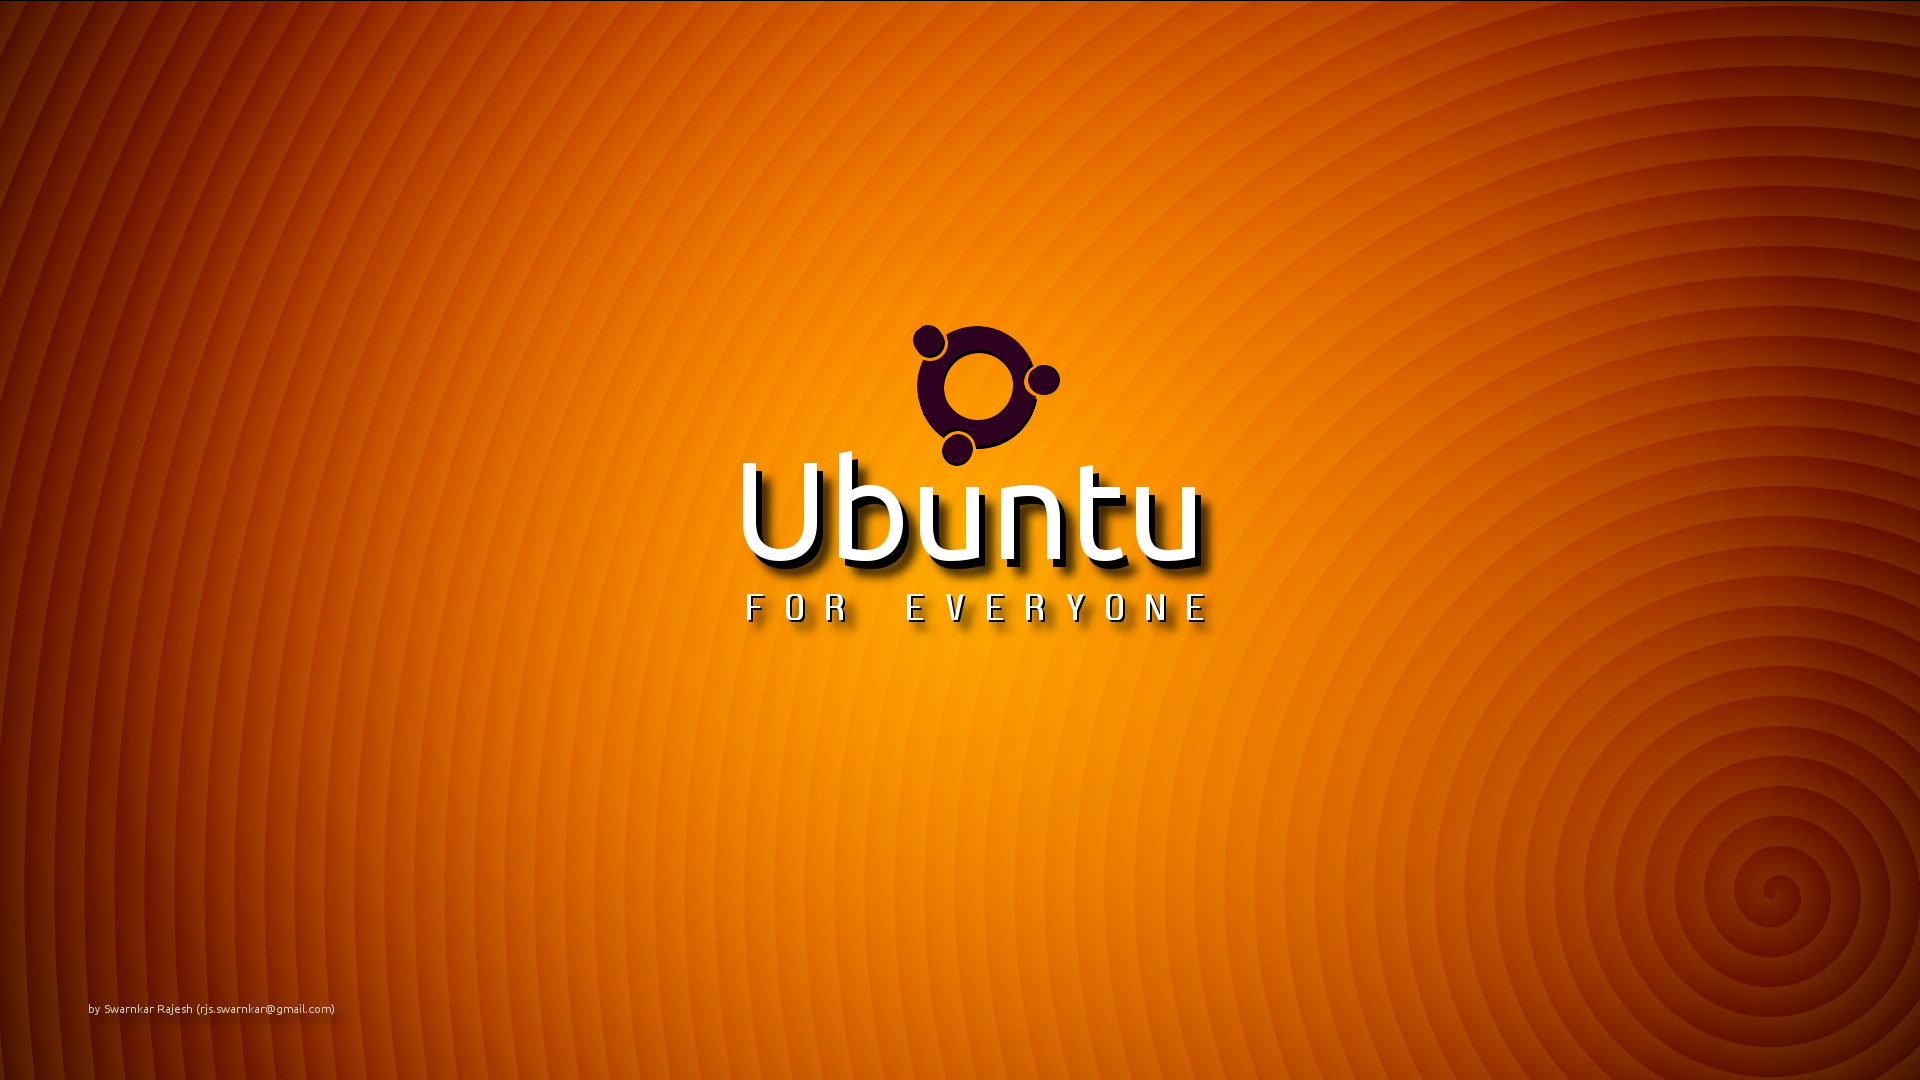 Ubuntu Hd wallpaper   1421824